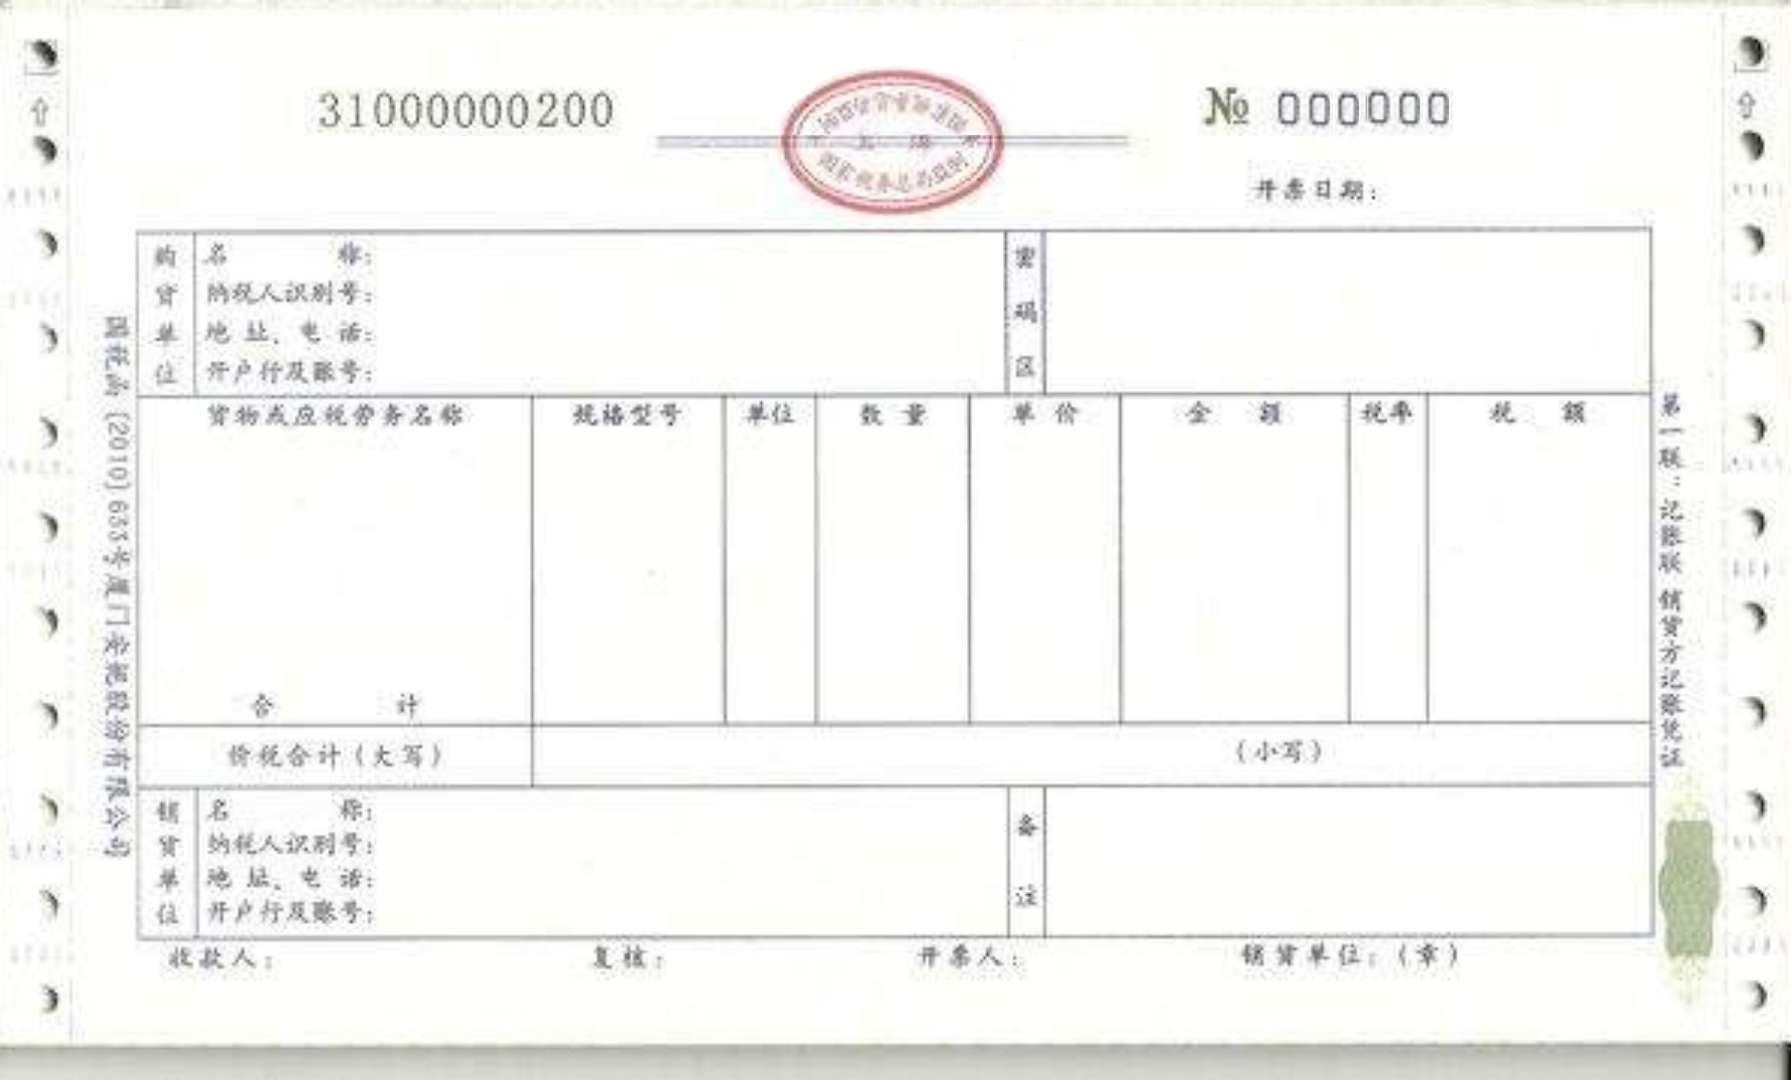 chinese invoice 发票 plantilla imagen principal